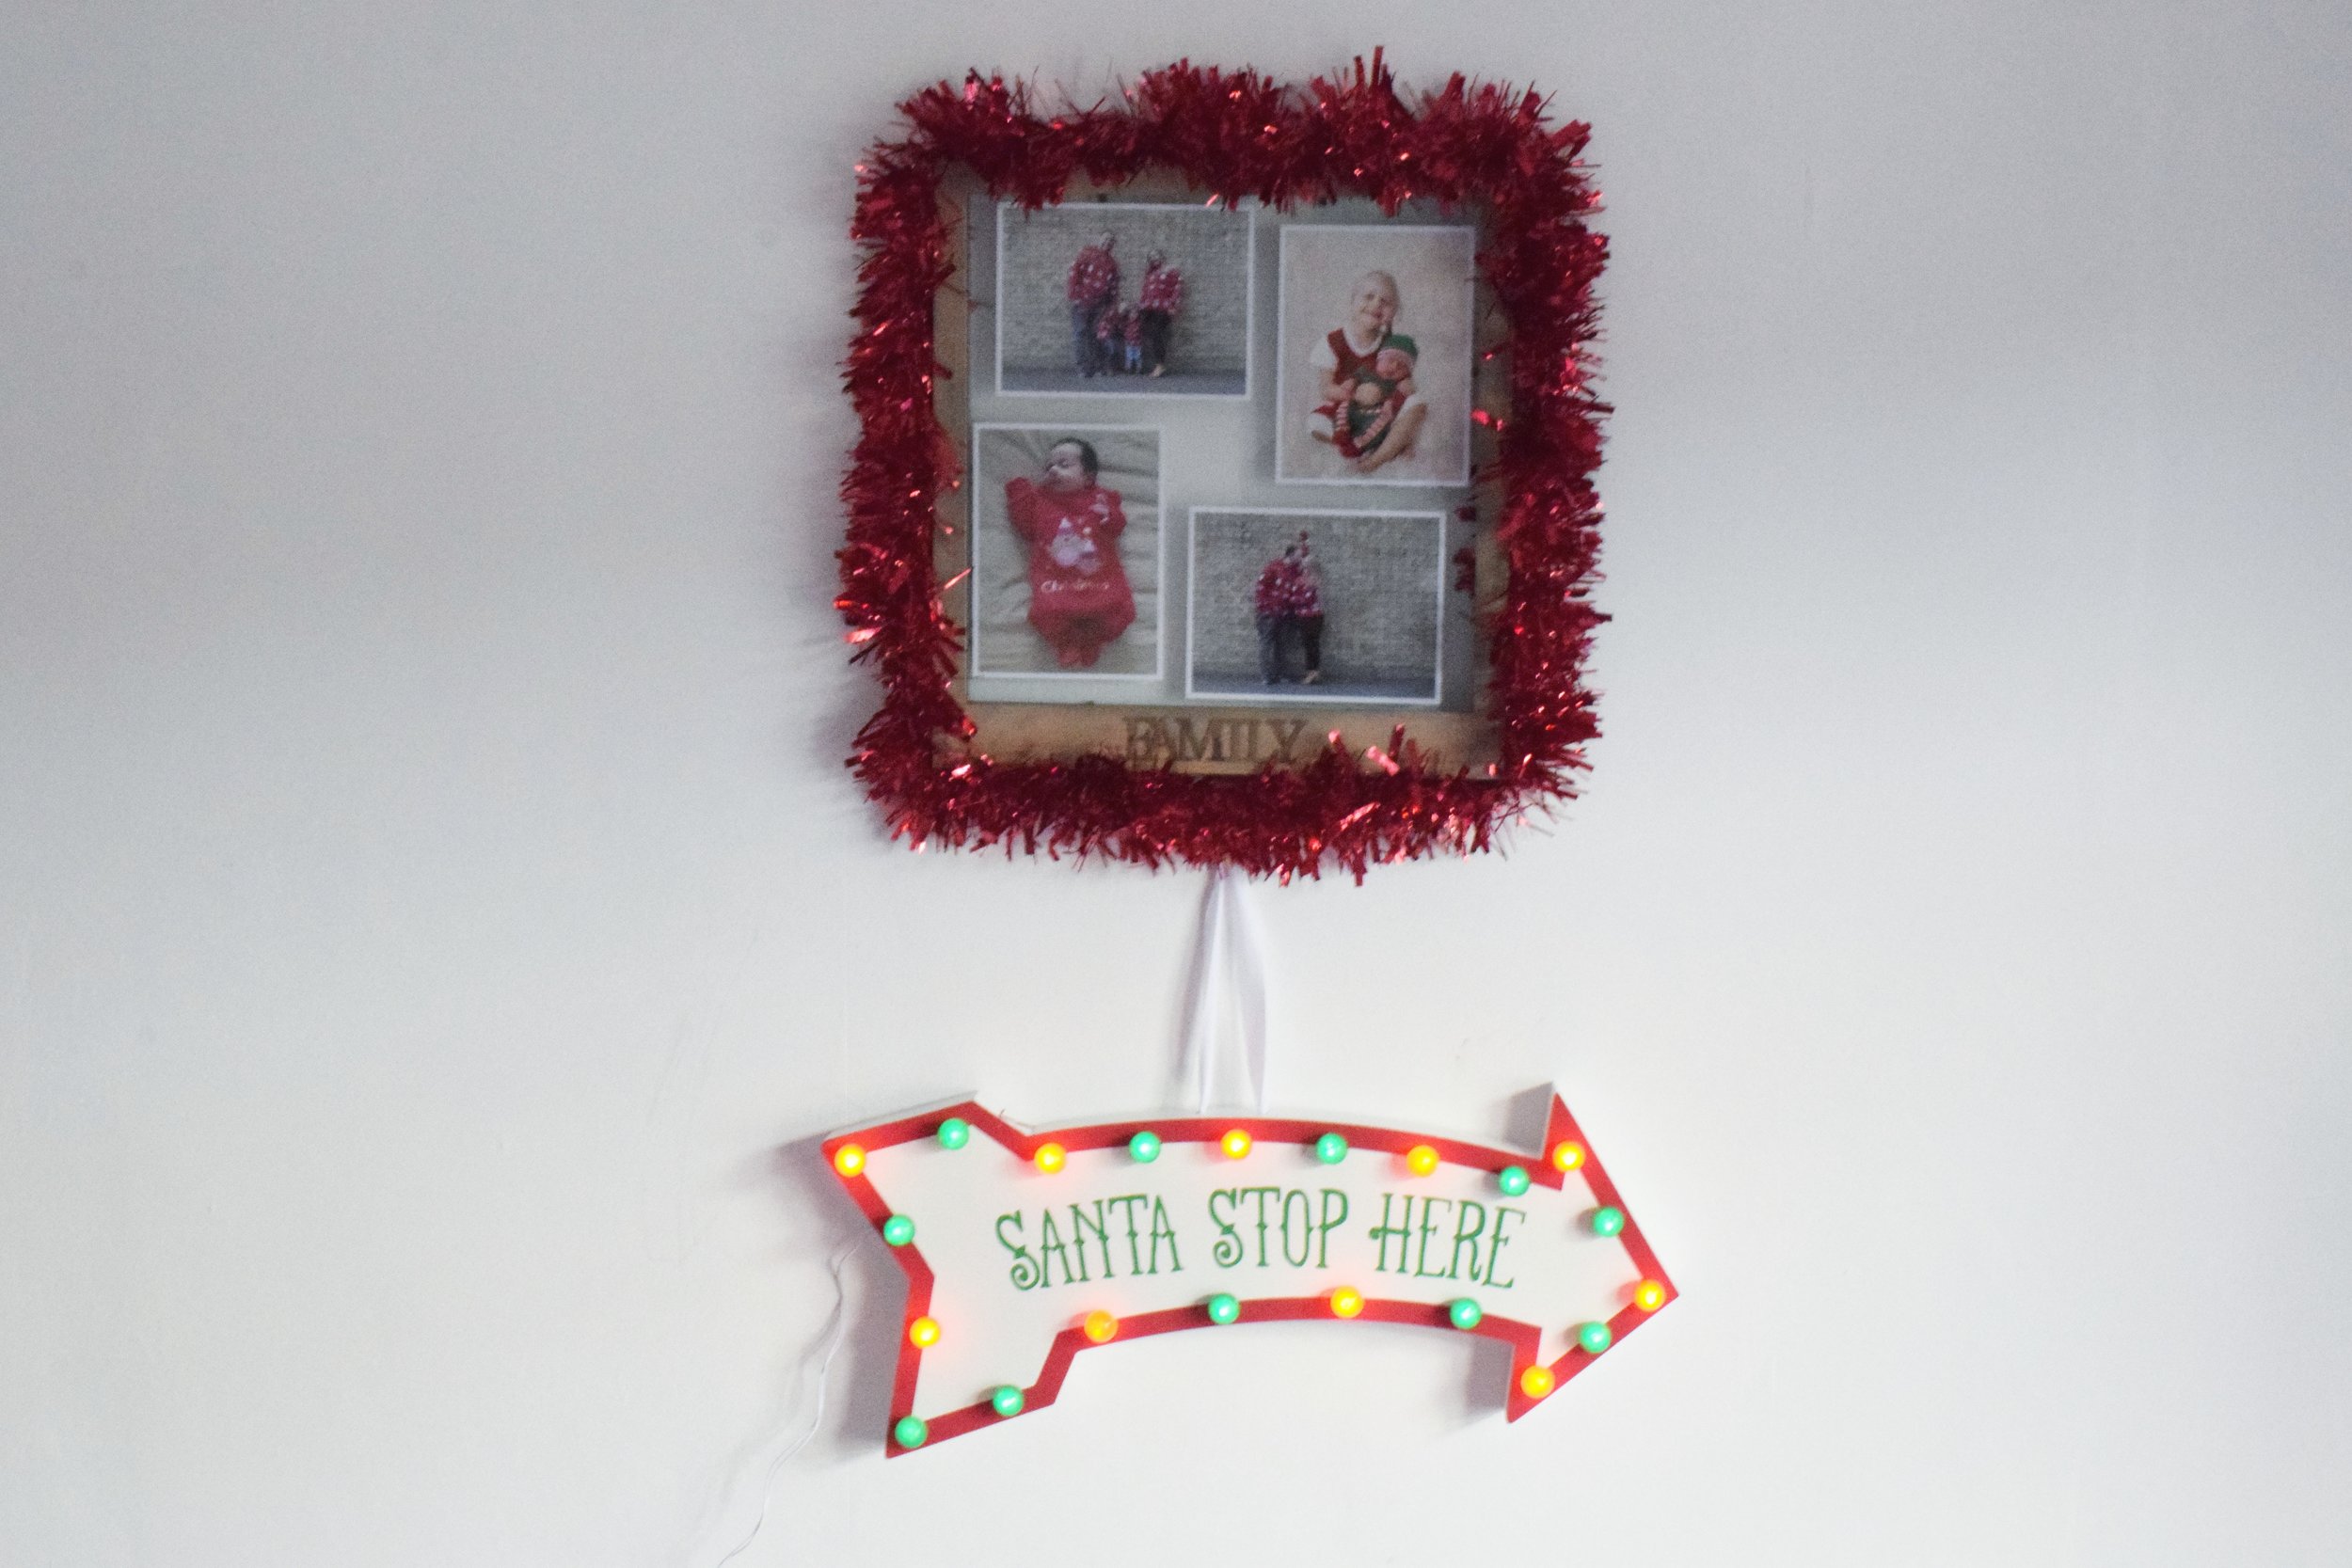 Christmas photo frame and Santa stop here sign